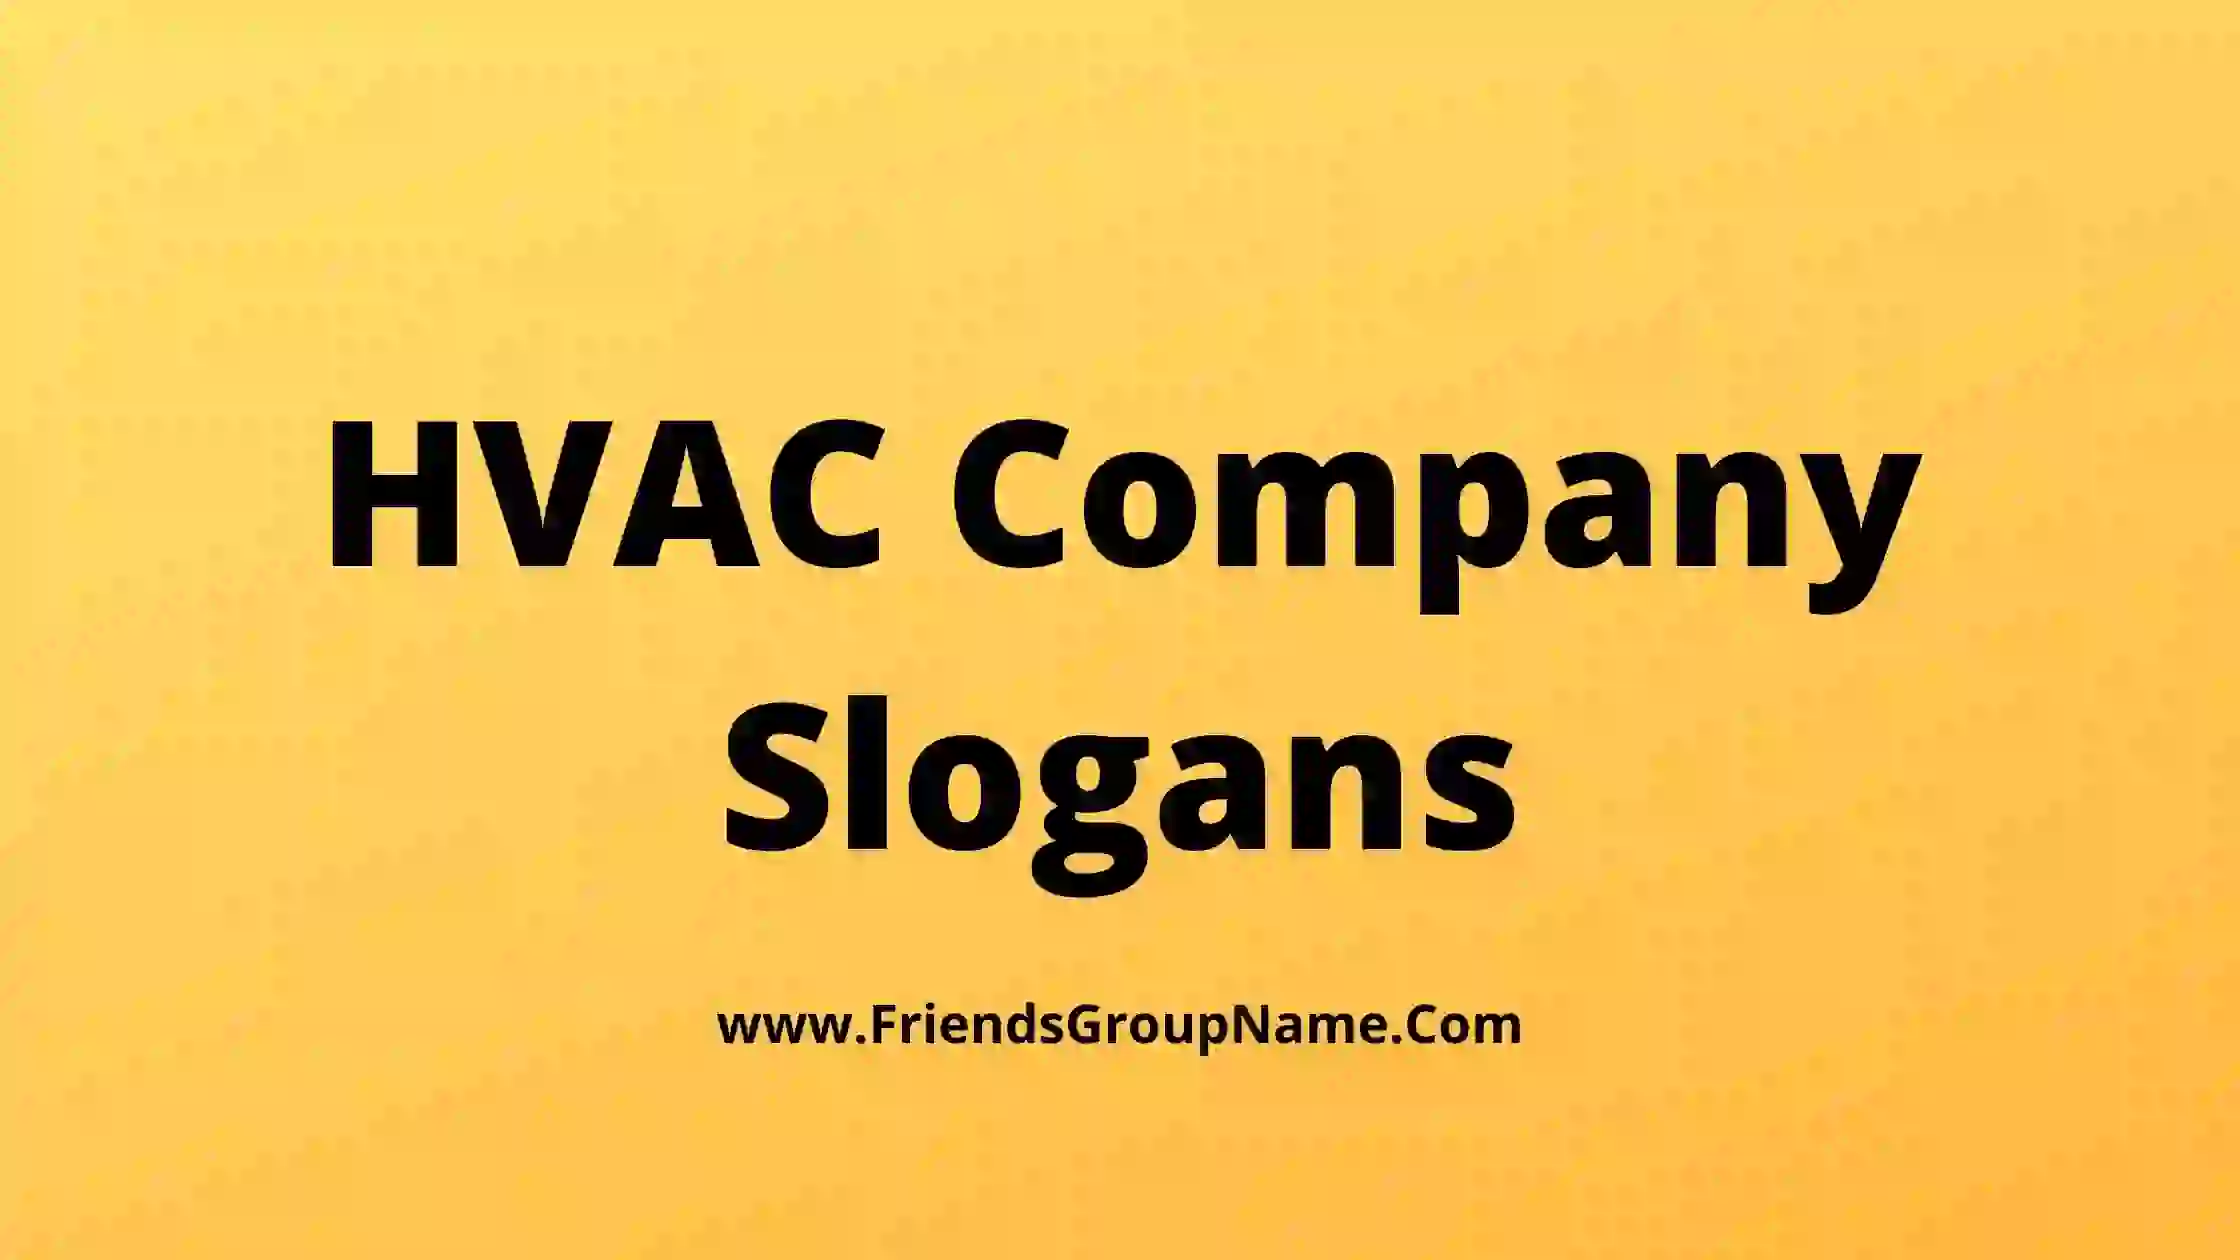 HVAC Company Slogans